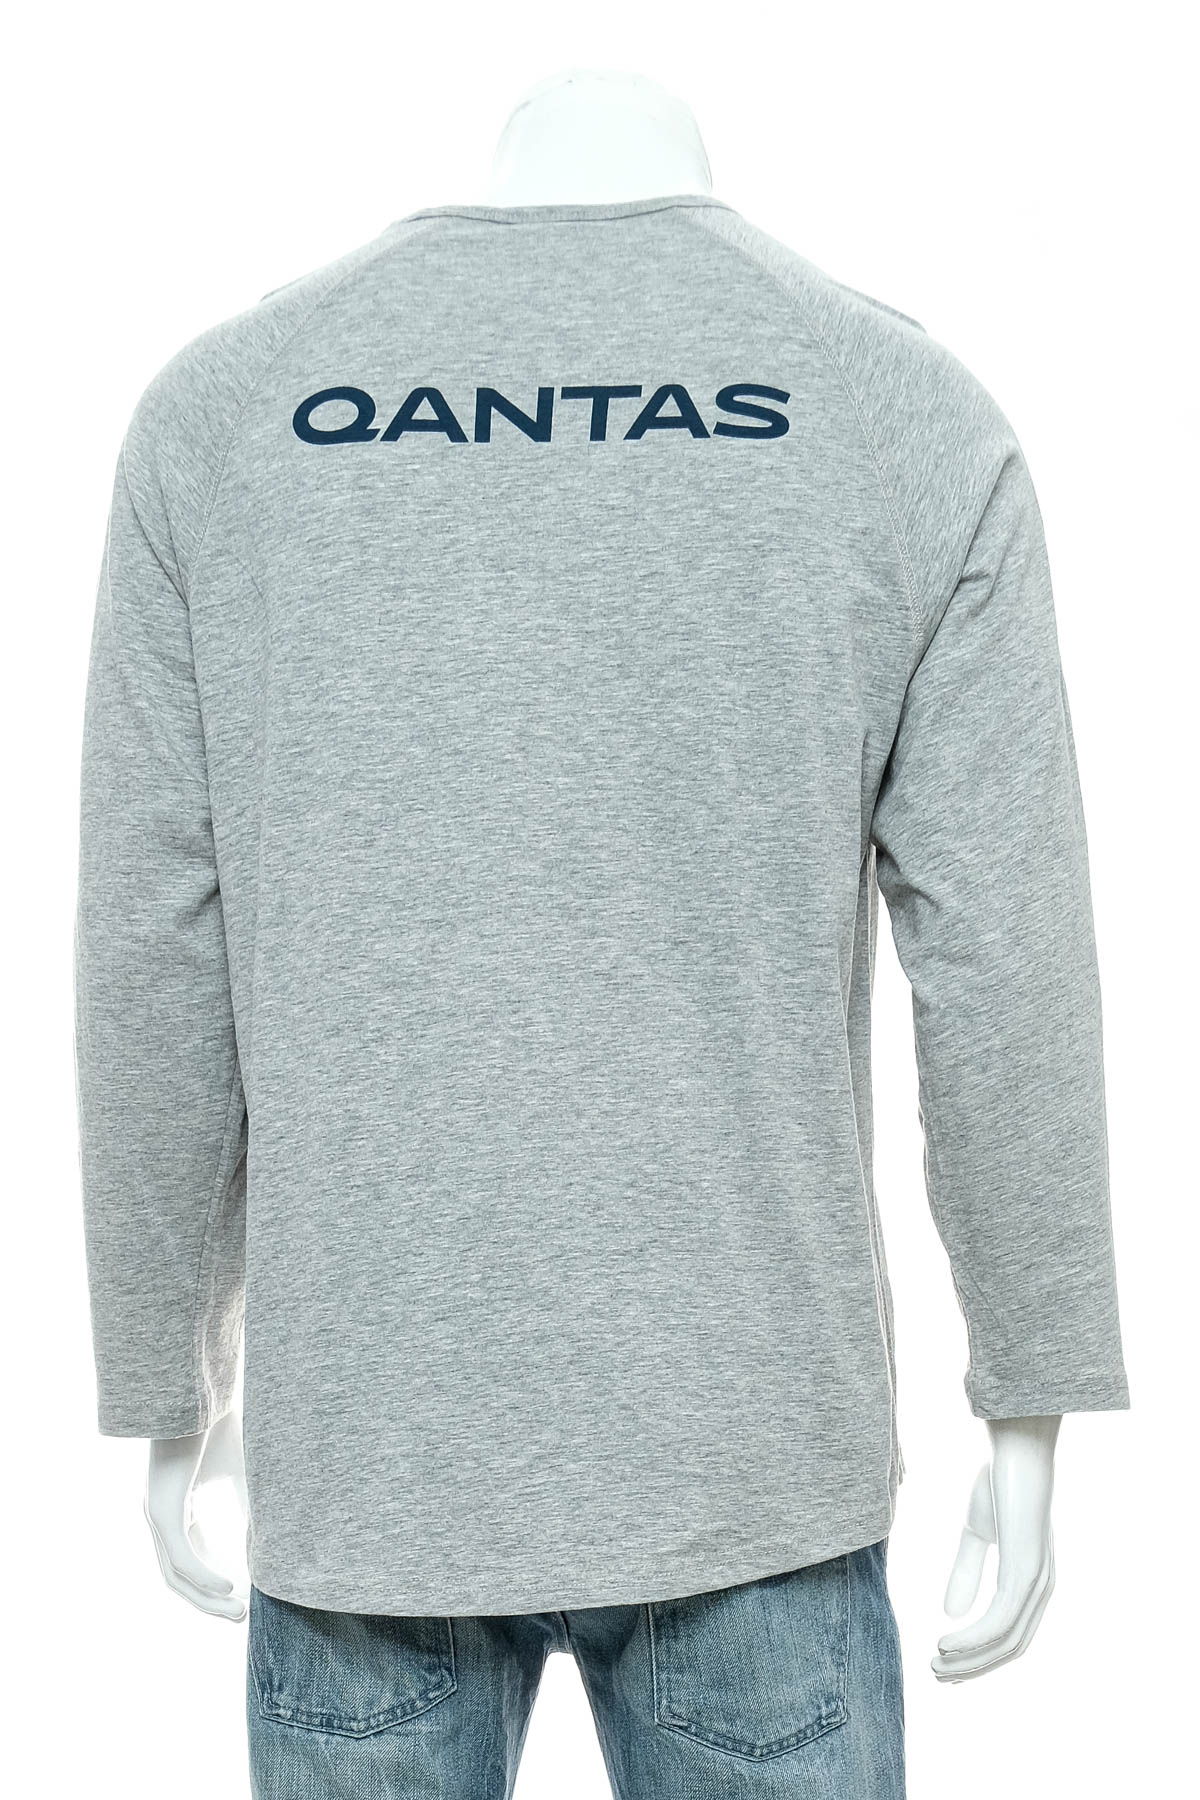 Men's blouse - Qantas - 1